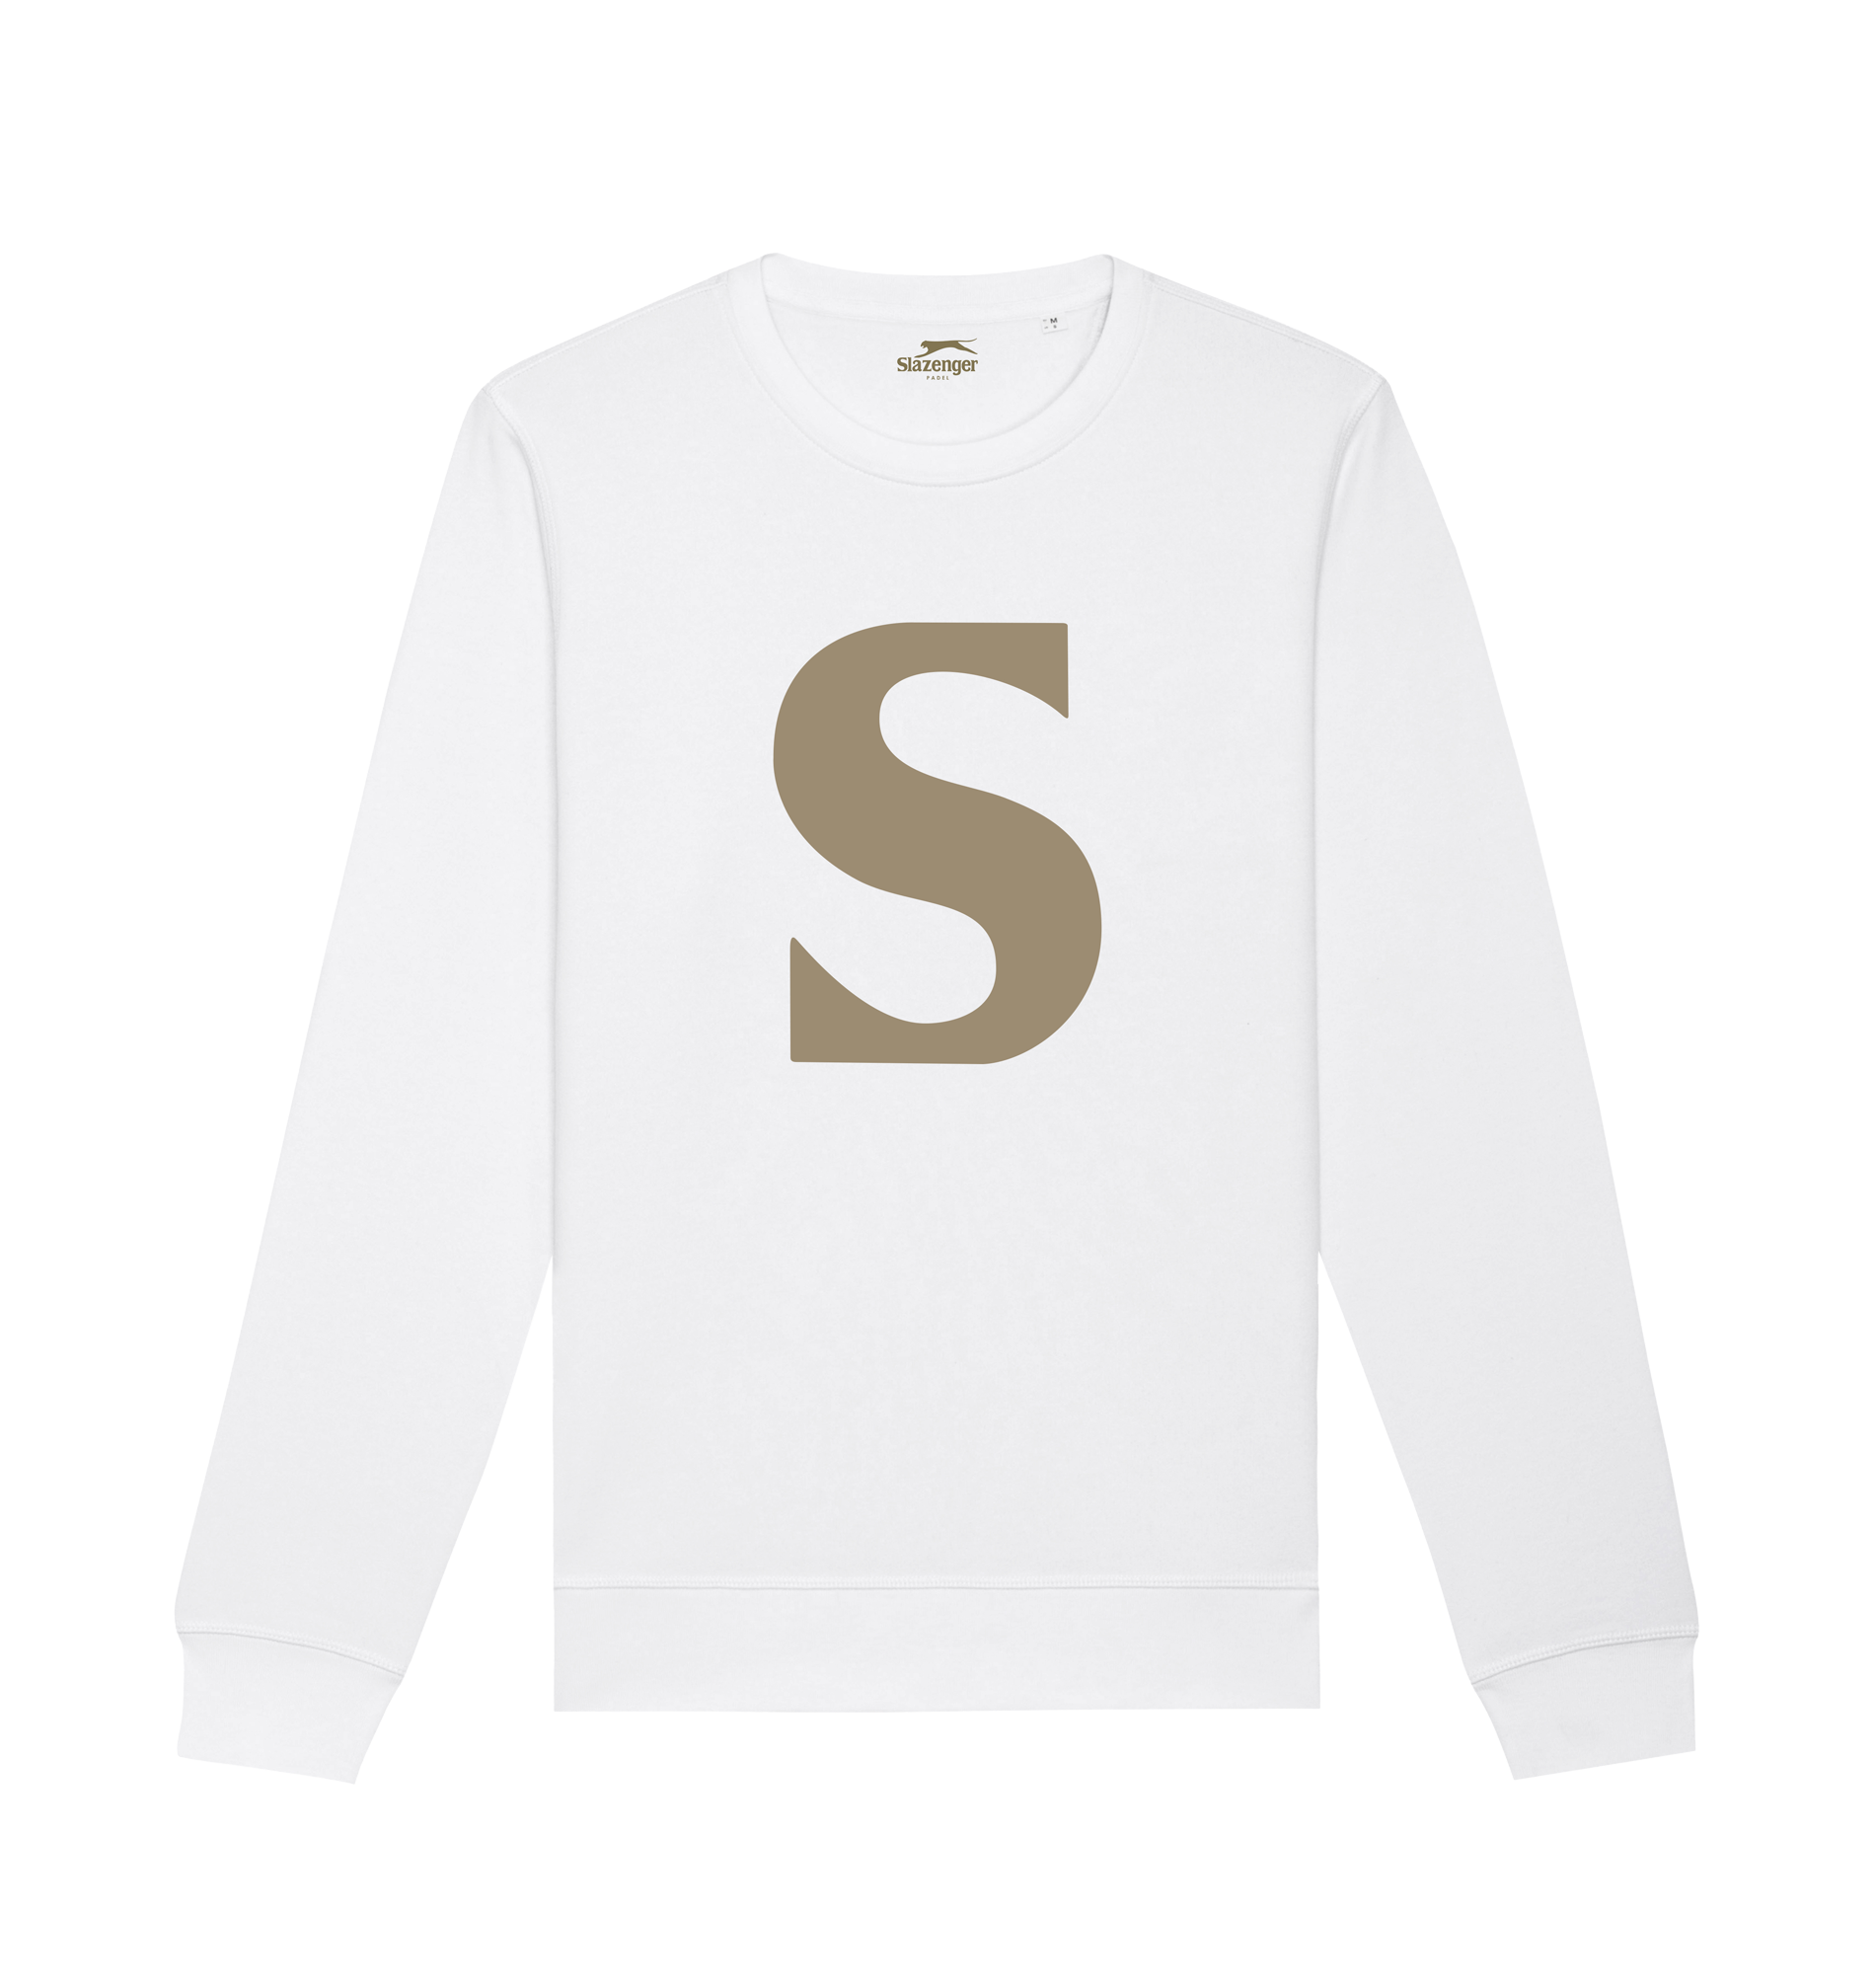 THE S SWEAT - WHITE